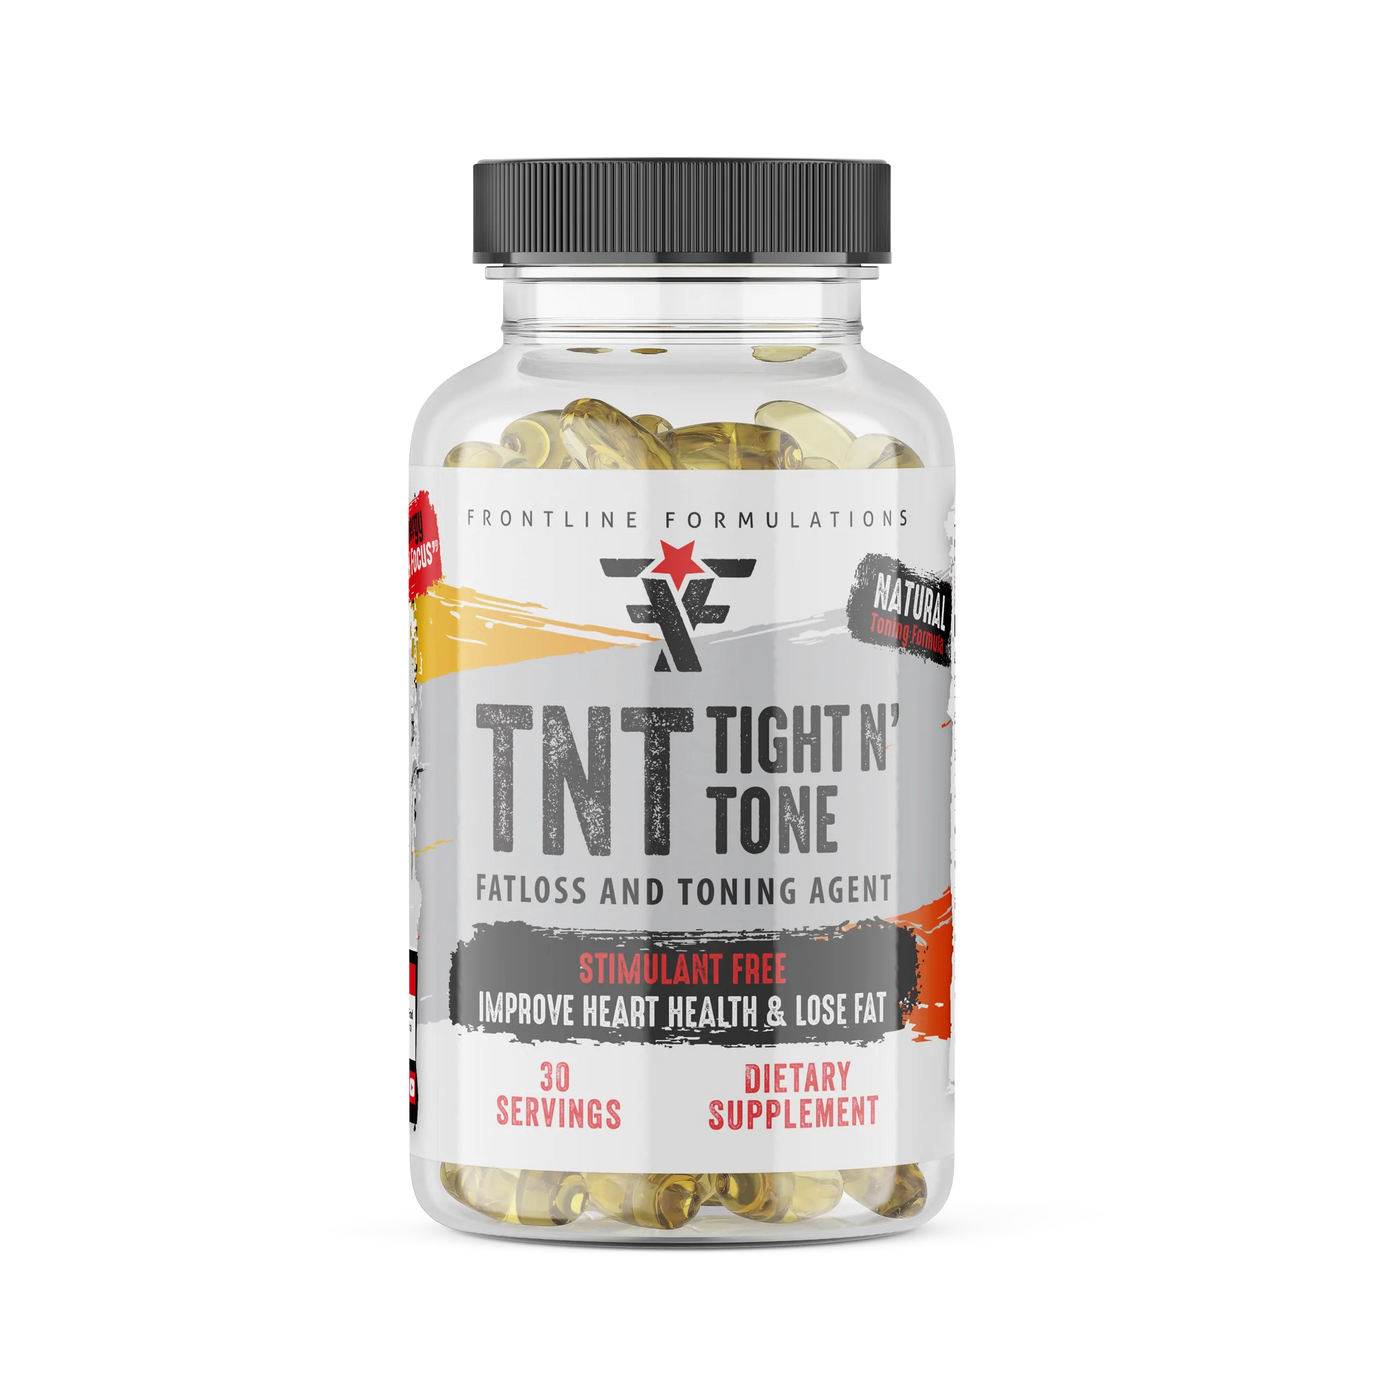 Frontline Formulations | TNT Tight-N-Tone Frontline Formulations $39.99